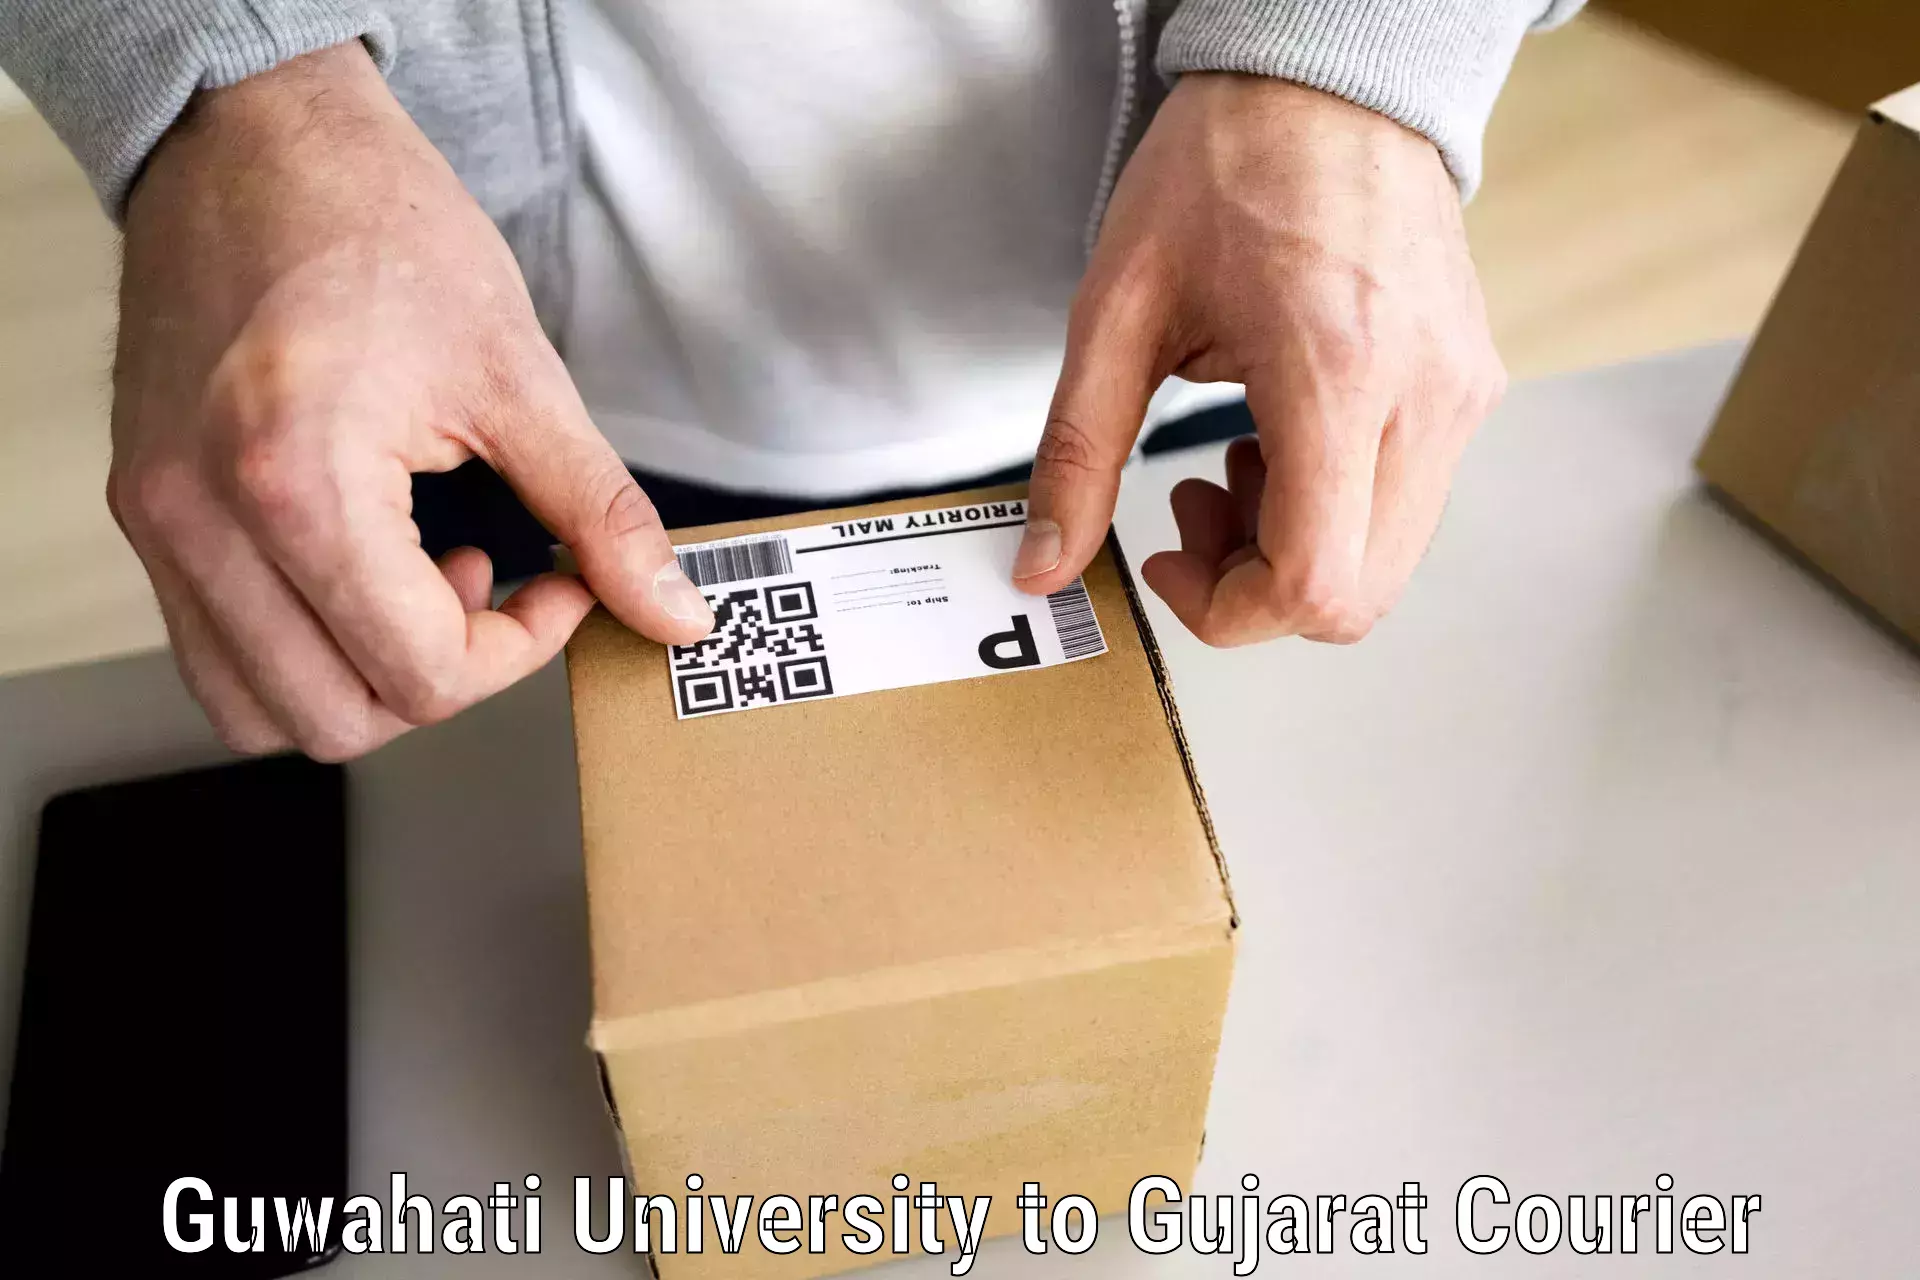 Furniture moving experts Guwahati University to Ahmedabad